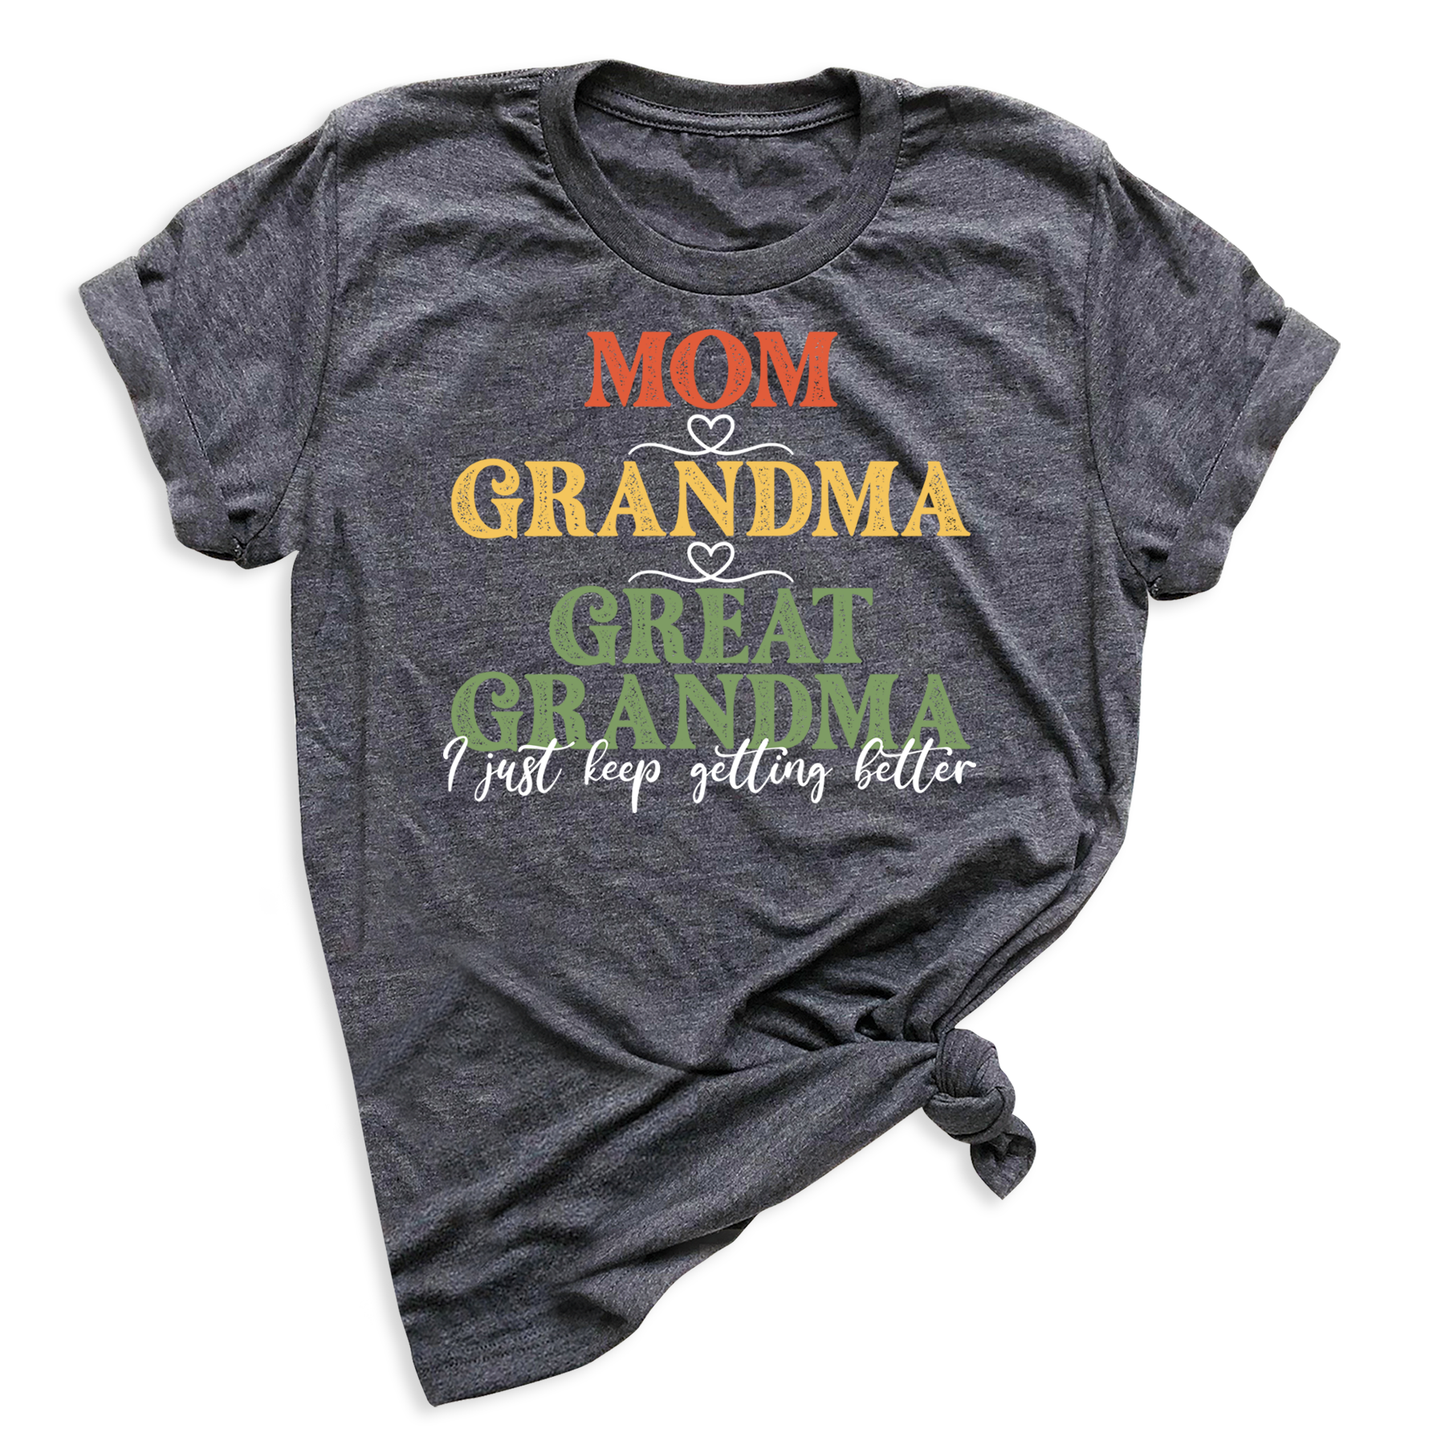 Mom Grandma Great Grandma Tee Shirts